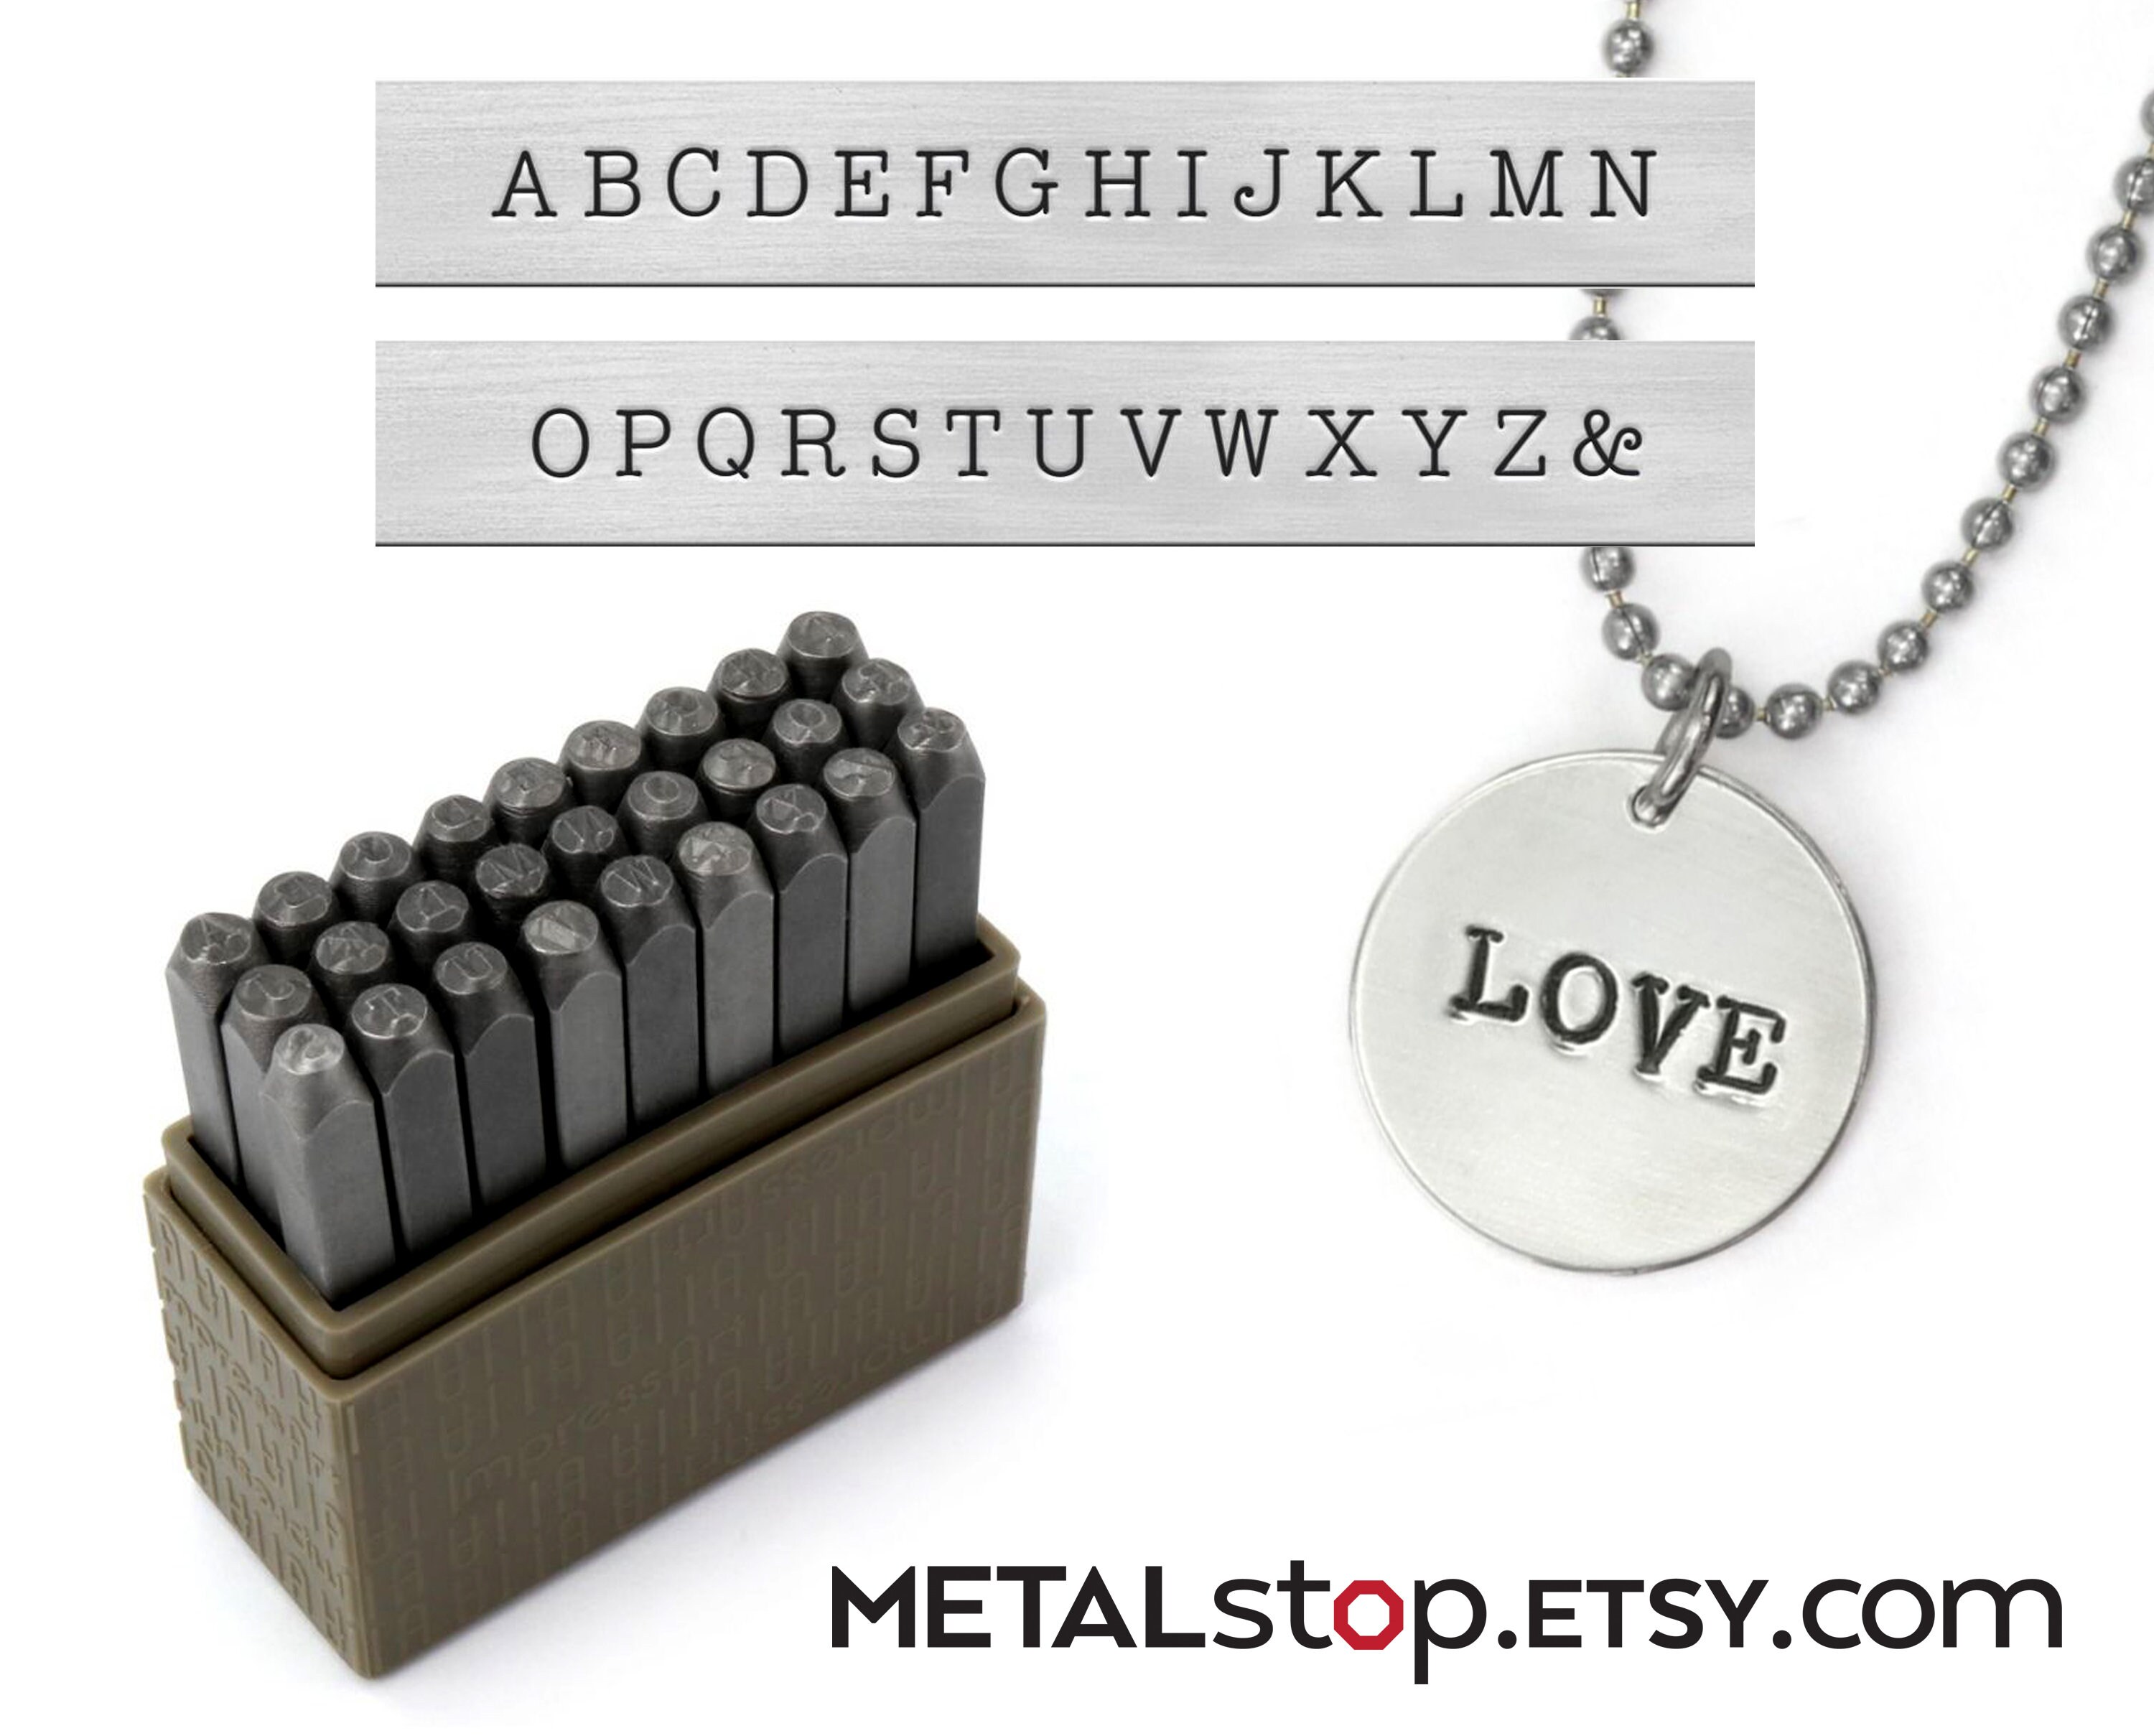 69-244-94 ImpressArt 3mm Basic Lowercase Typewriter Metal Letter